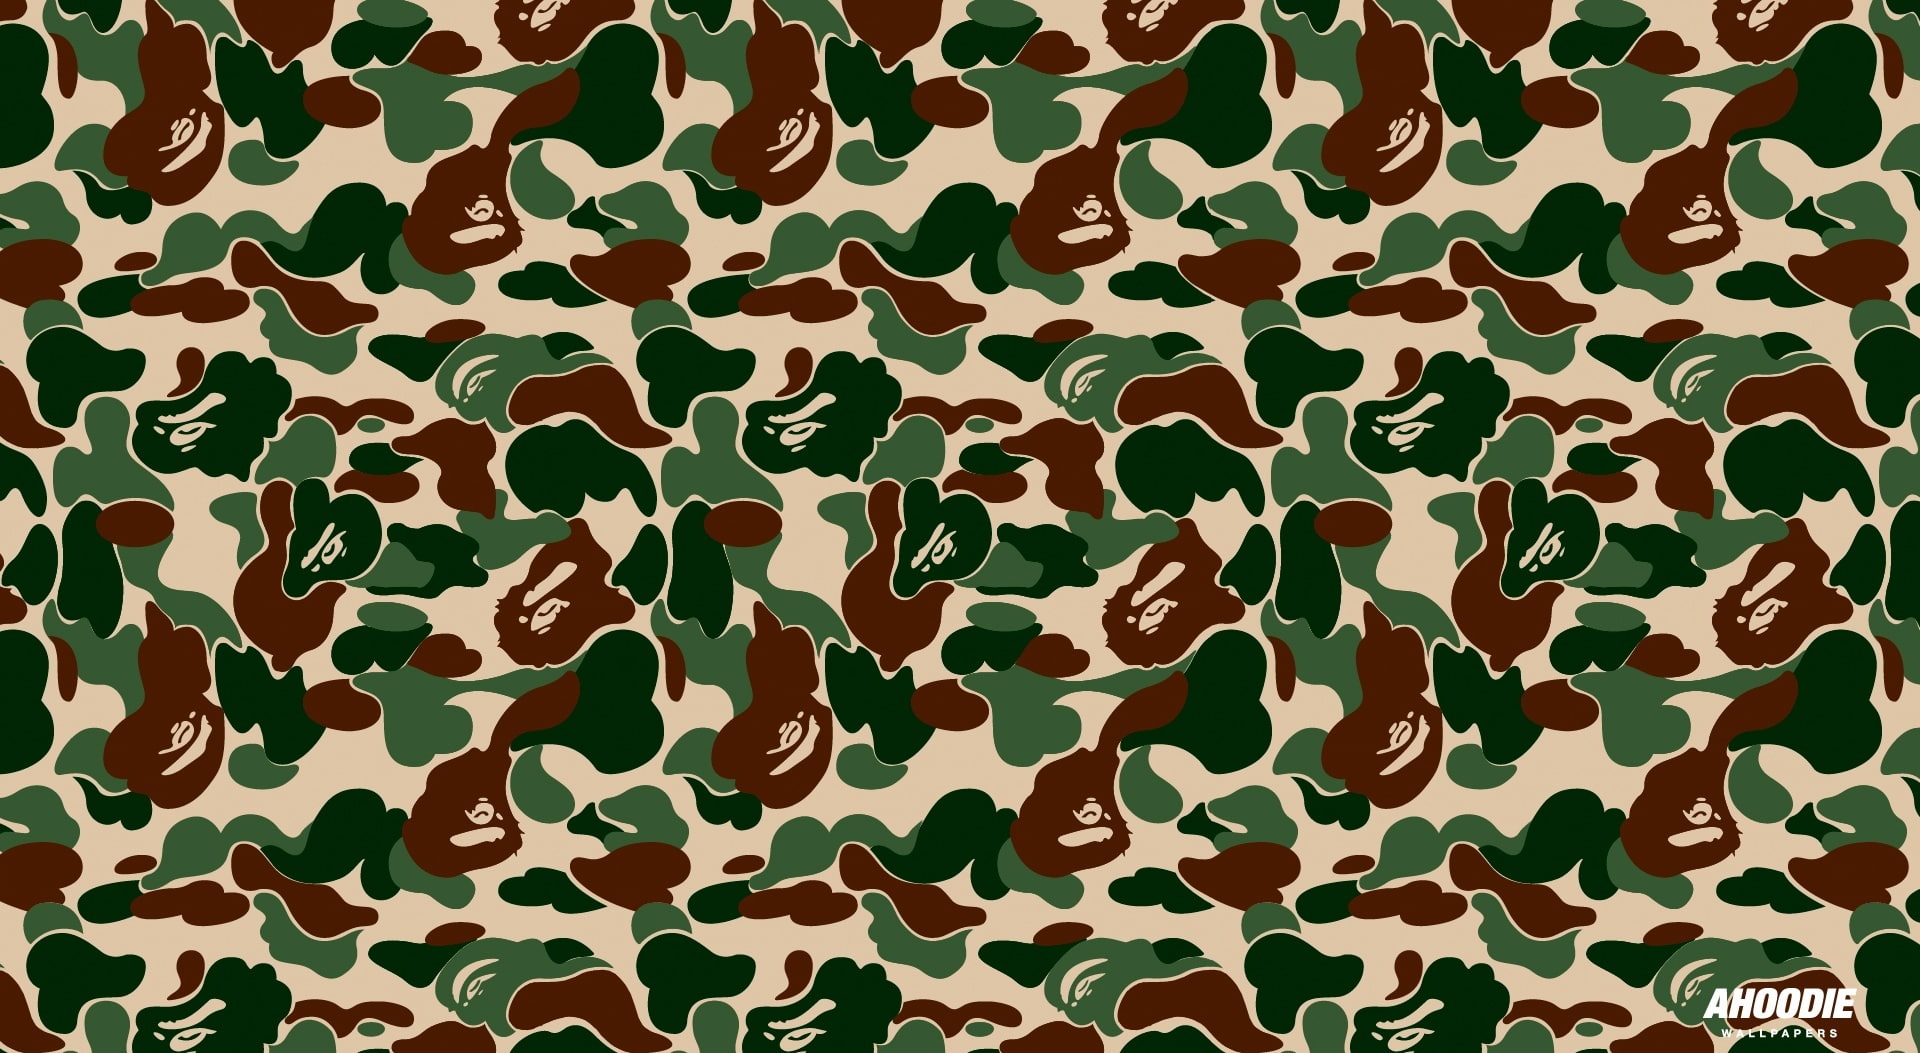 Bape Camo, Aero, Patterns, camouflage, full frame, backgrounds